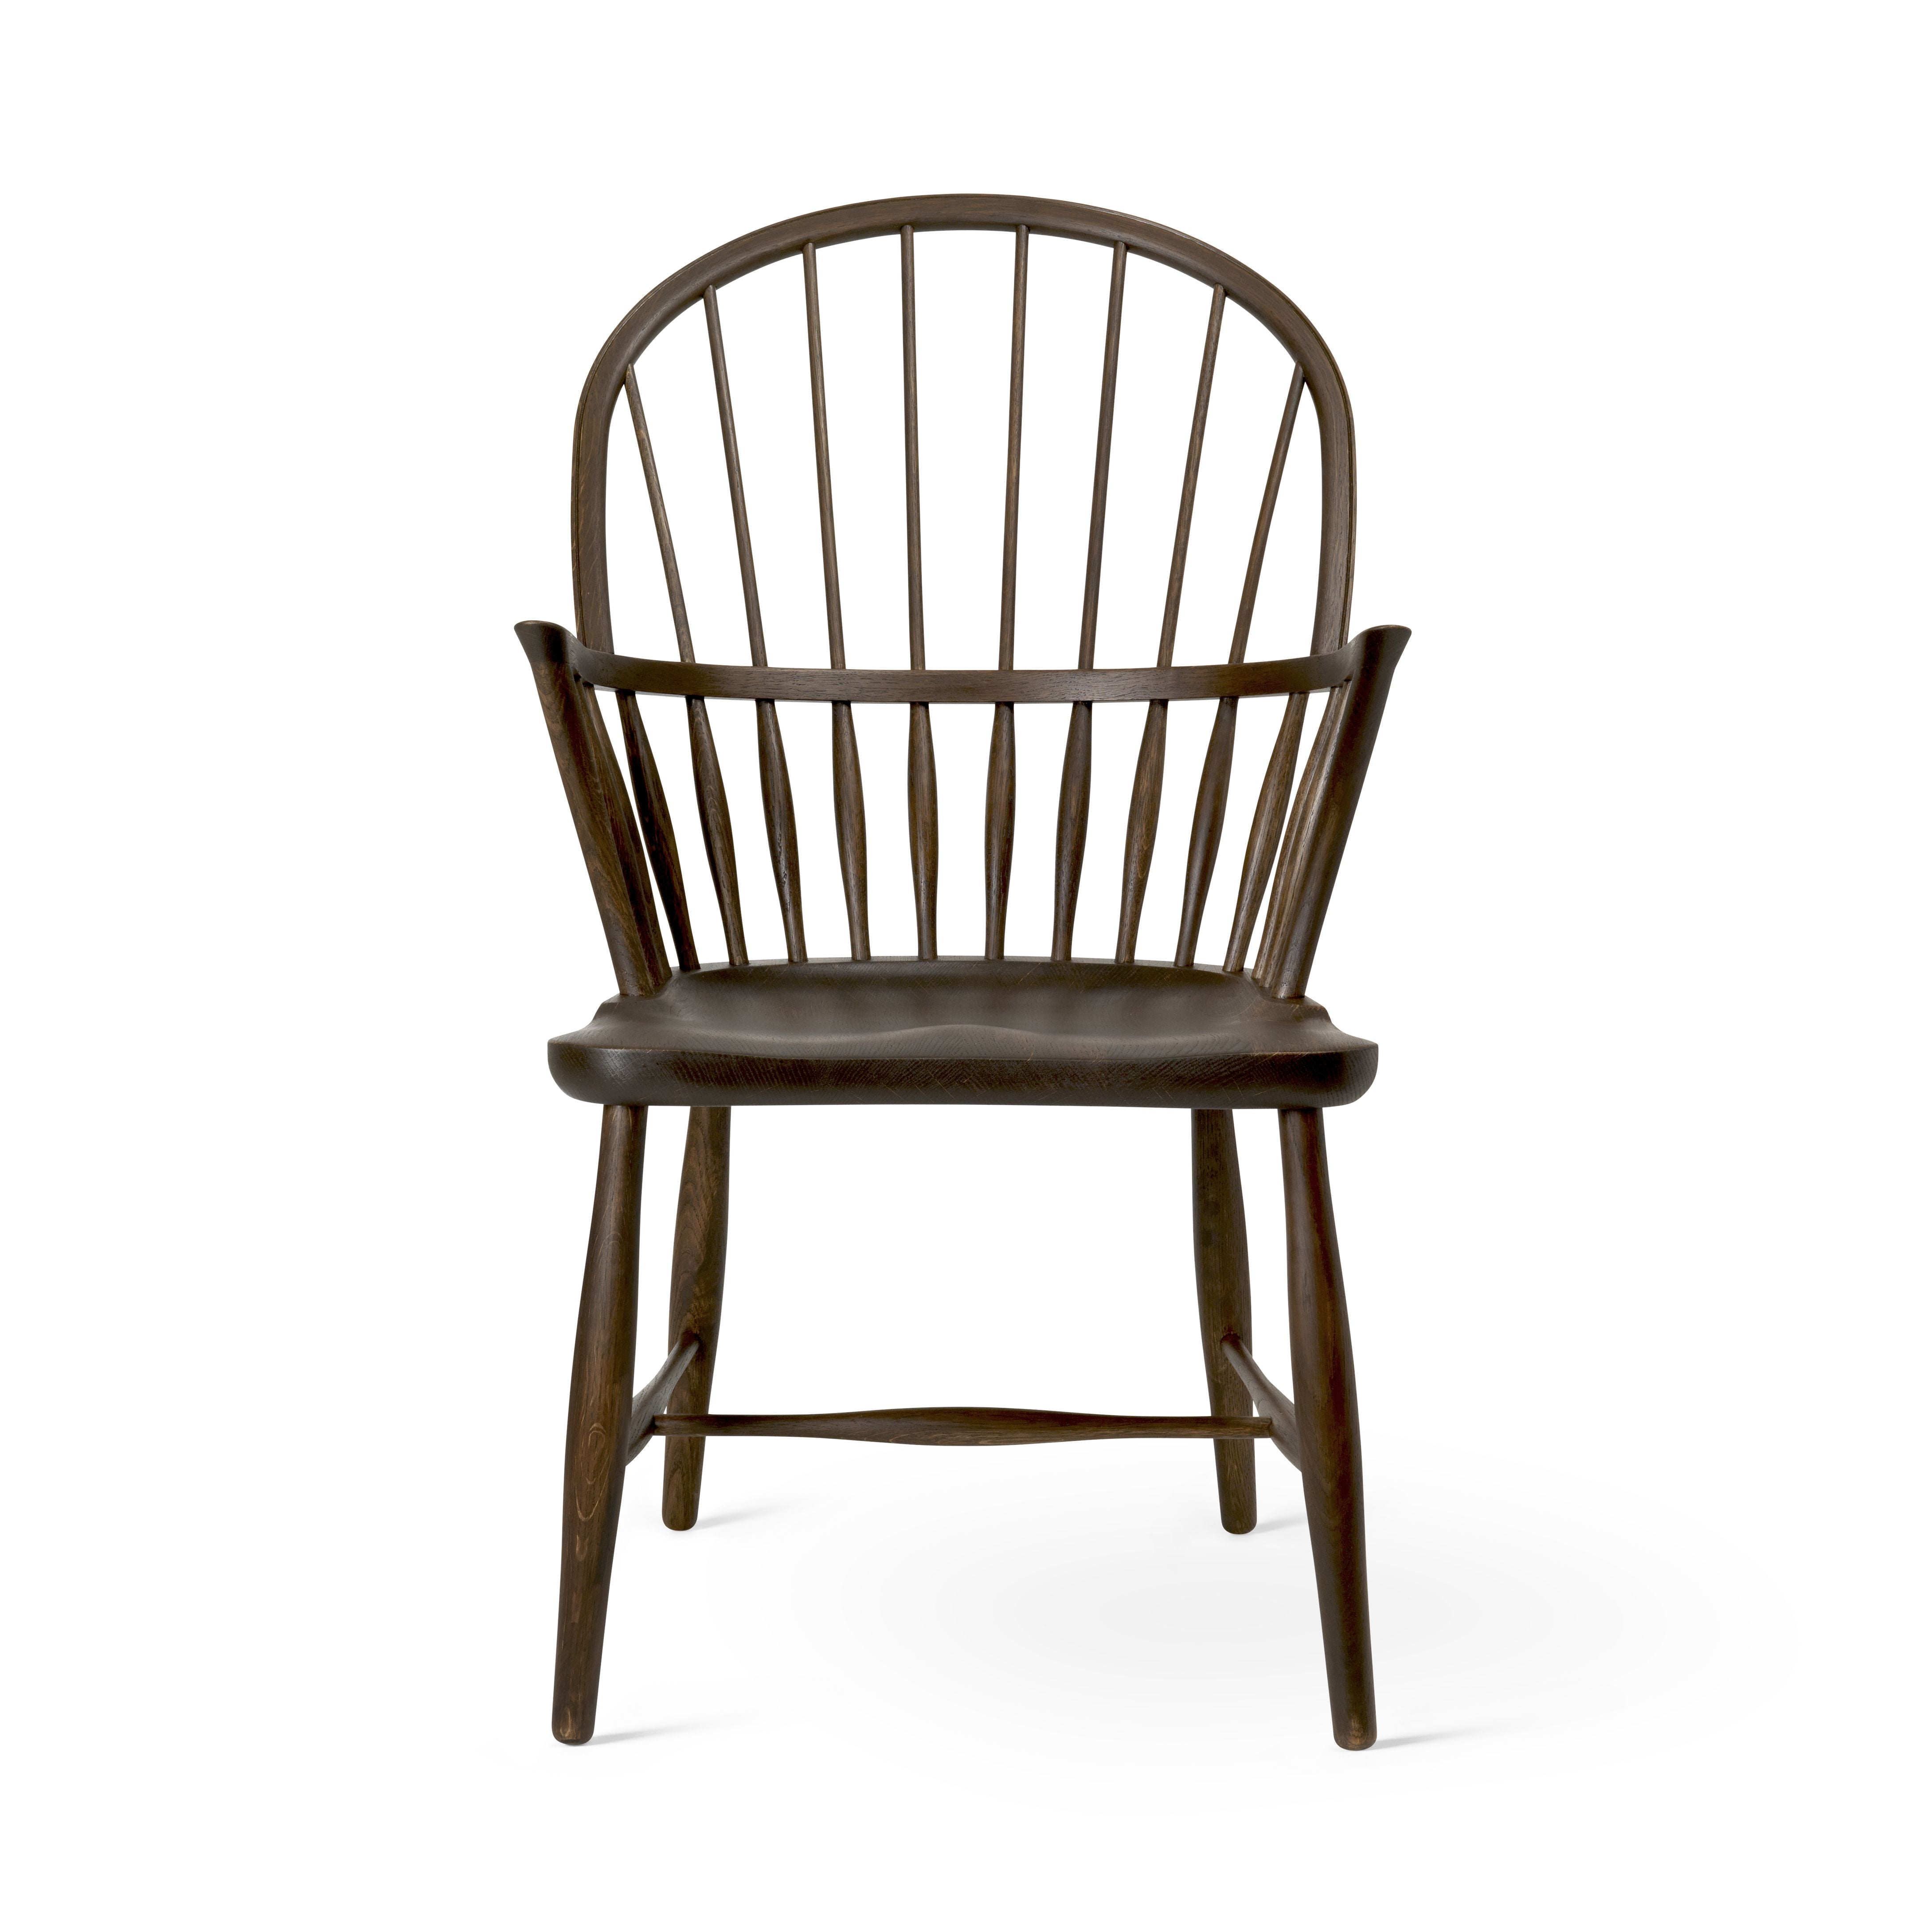 Carl Hansen Fh38 Windsor Chair, Smoke Colored Oil